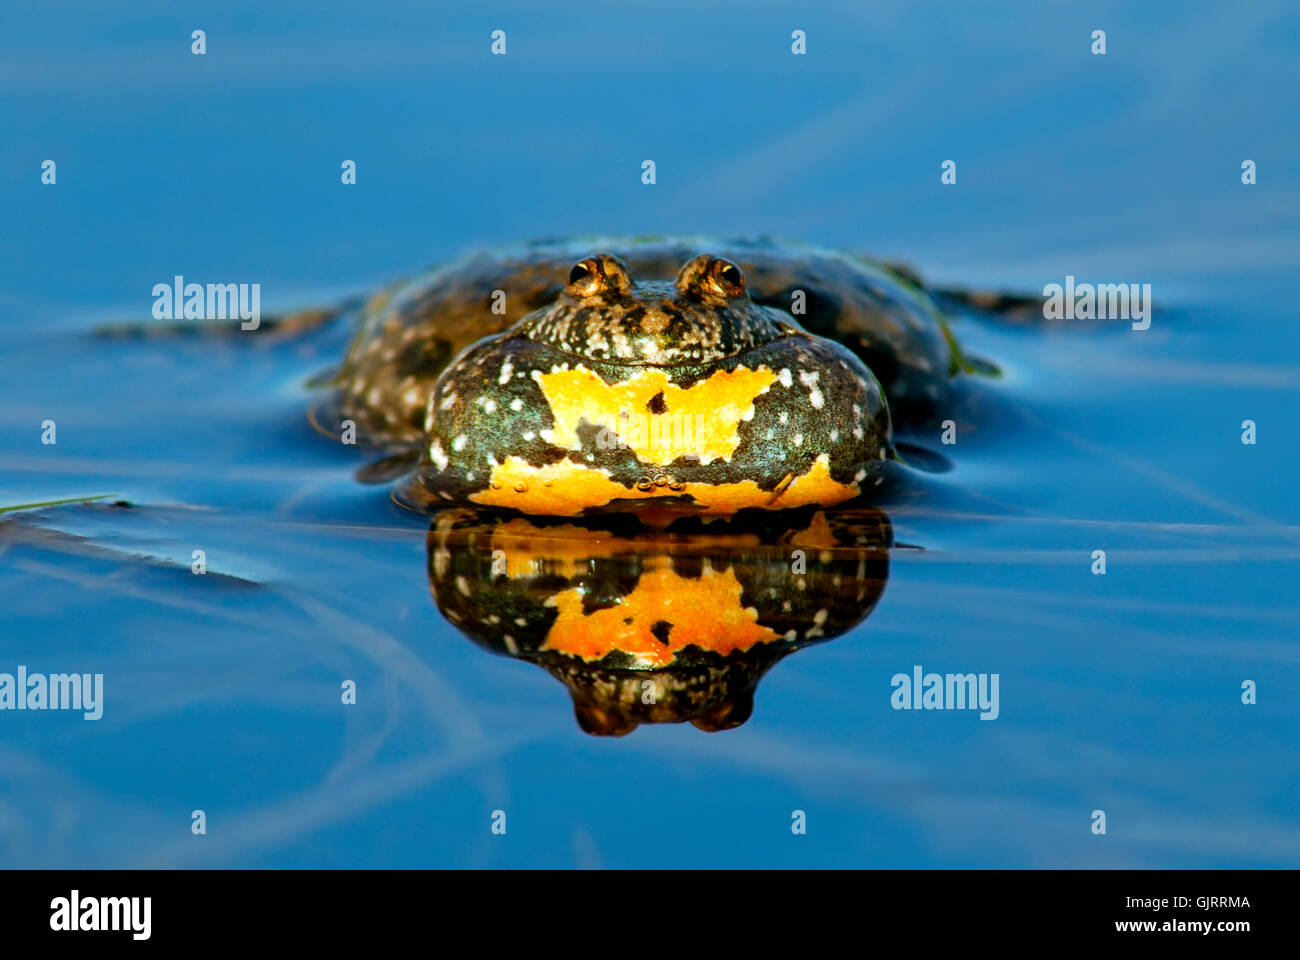 animal amphibian amphibians Stock Photo